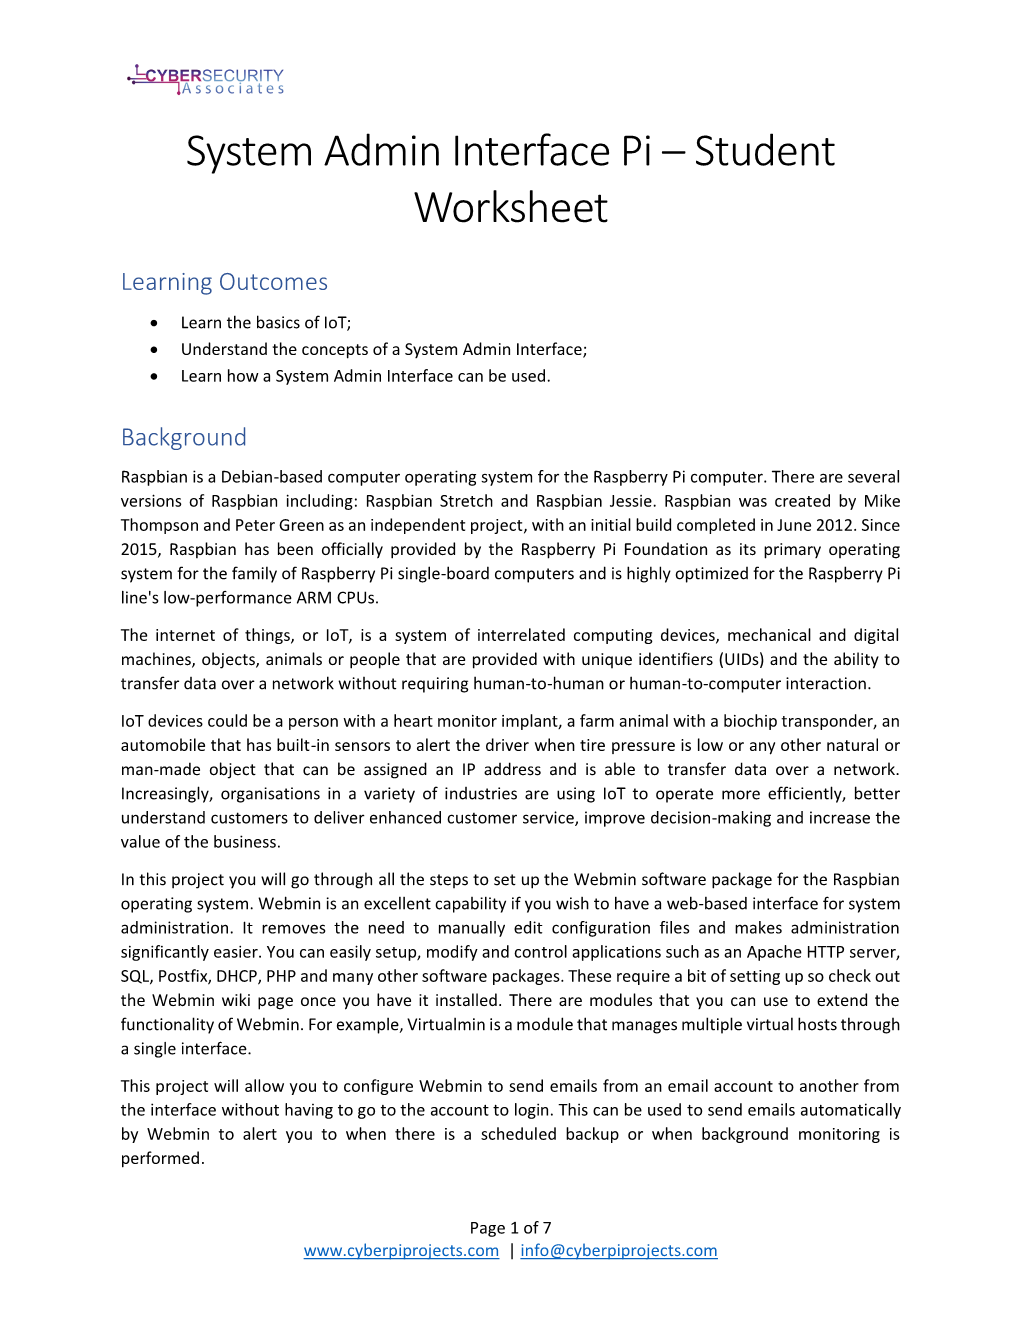 System Admin Interface Pi – Student Worksheet